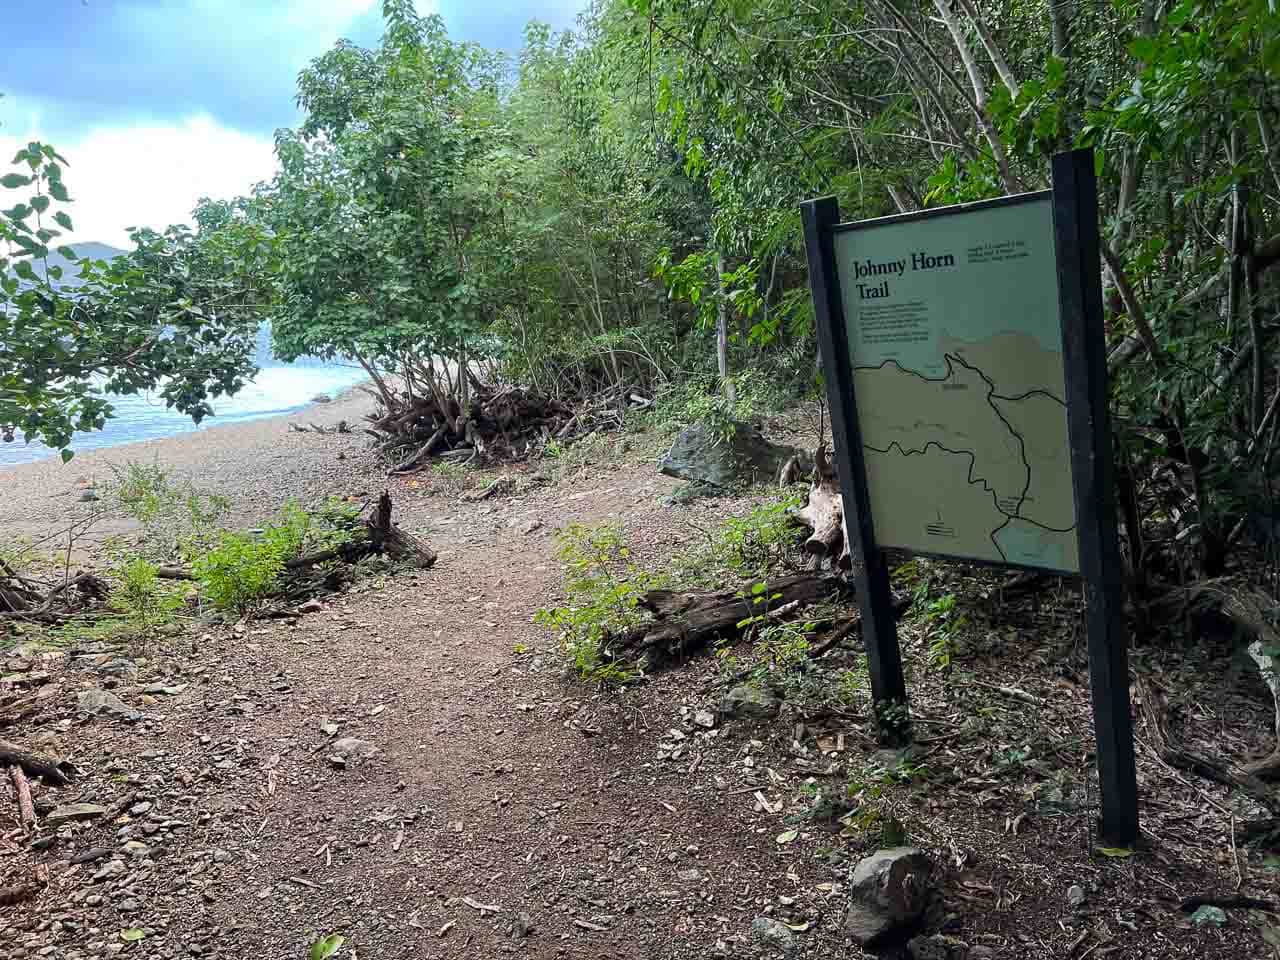 Johnny Horn Trail sign in Virgin Islands National Park